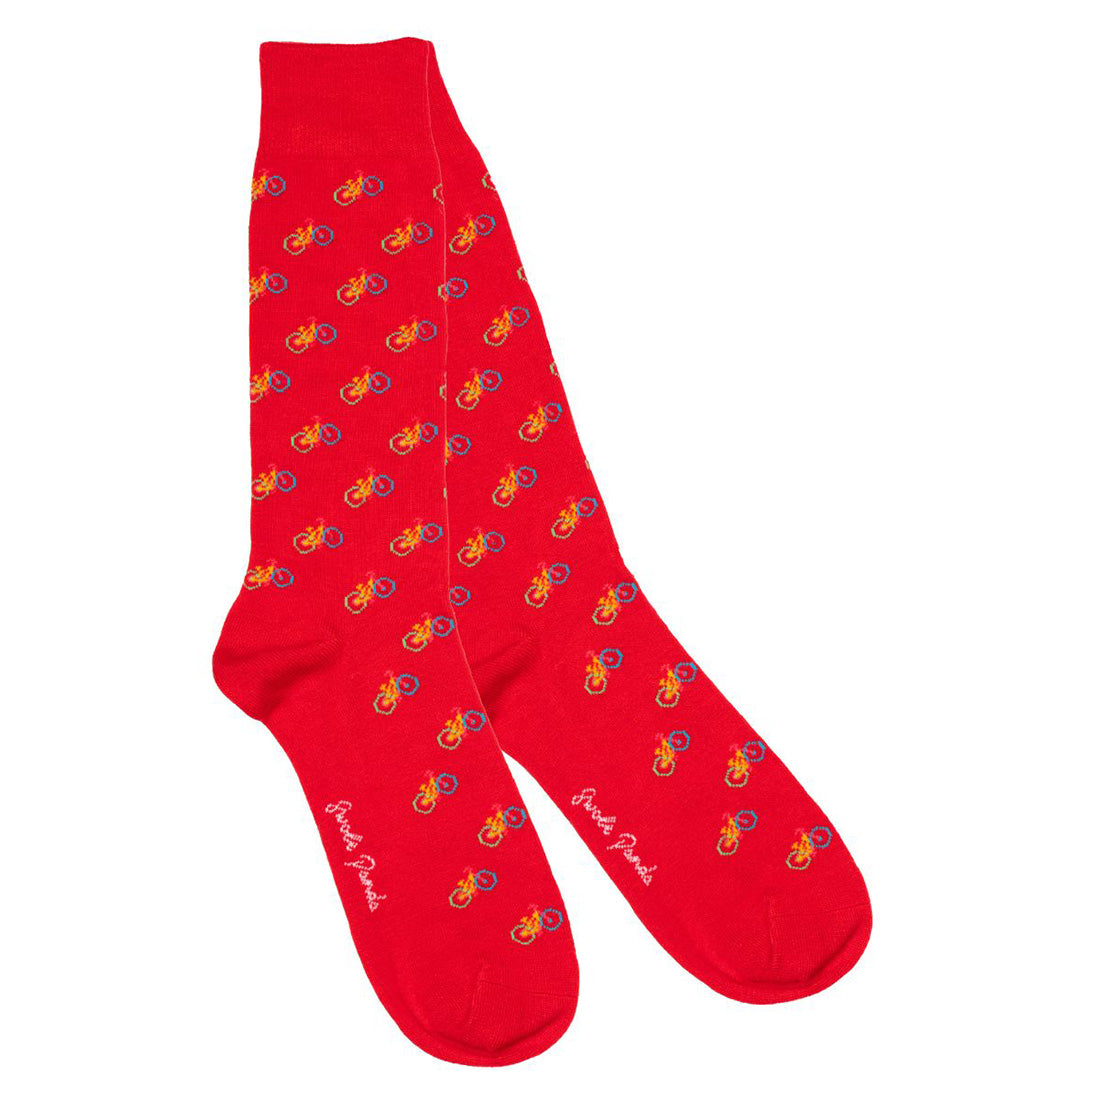 socks-red-bicycle-bamboo-socks-1.jpg